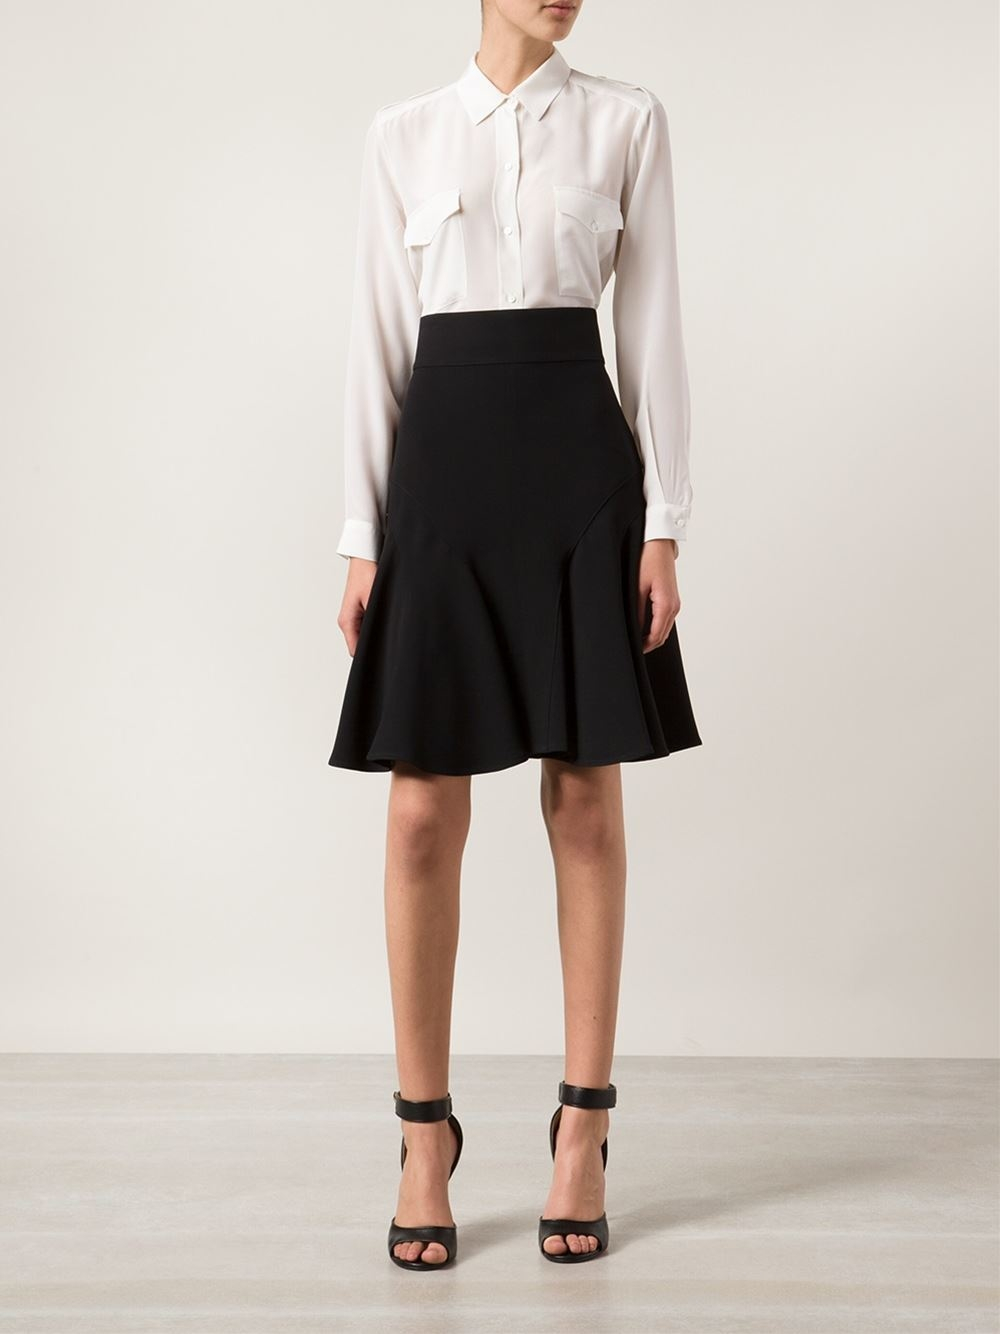 Lyst - Givenchy A-Line Godet Skirt in Black